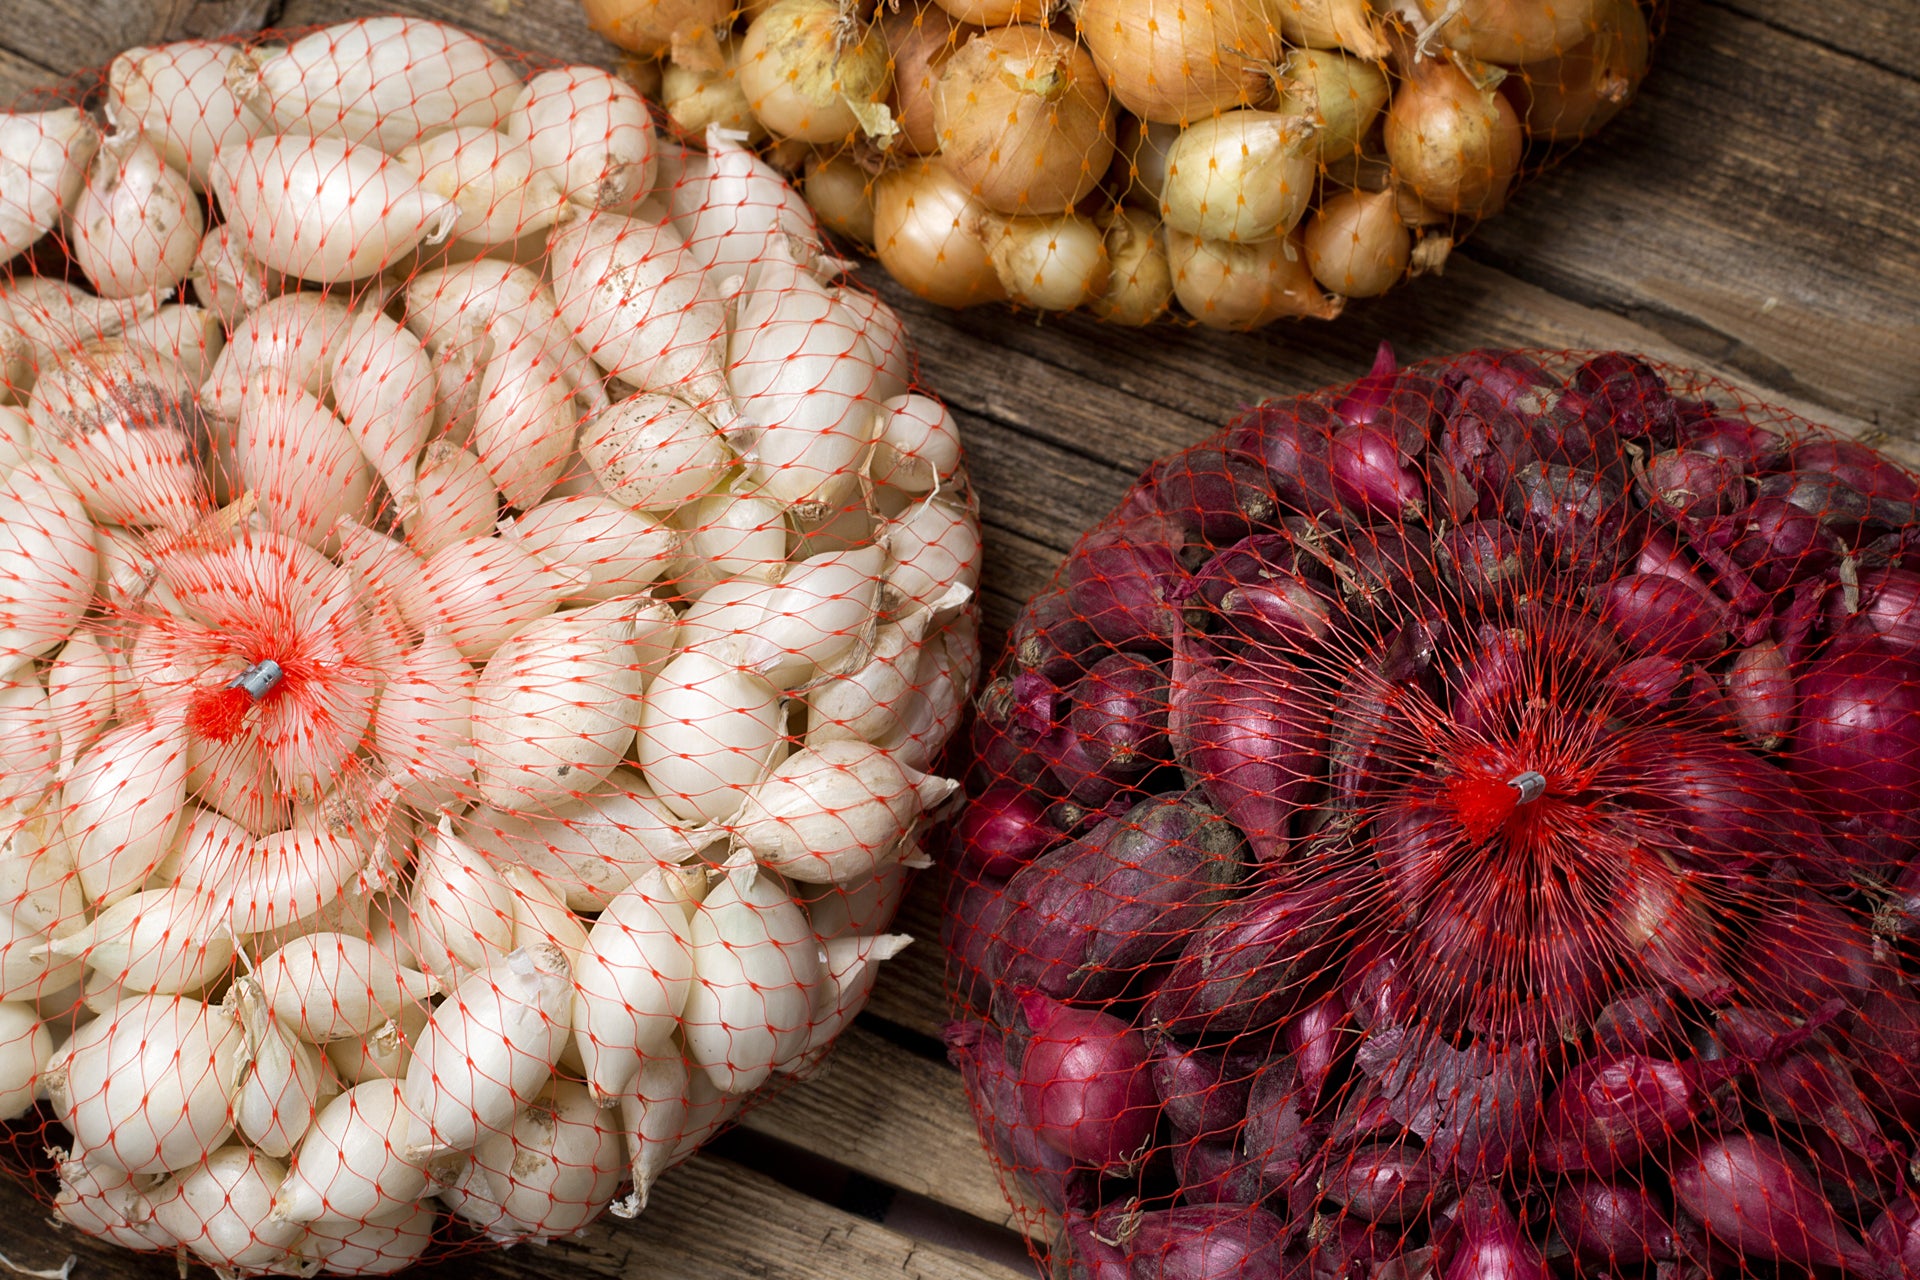 Mixed Red White & Yellow Onion Sets Naturally Grown Non-GMO | Onion Bulbs 8 oz - FREE SHIPPING